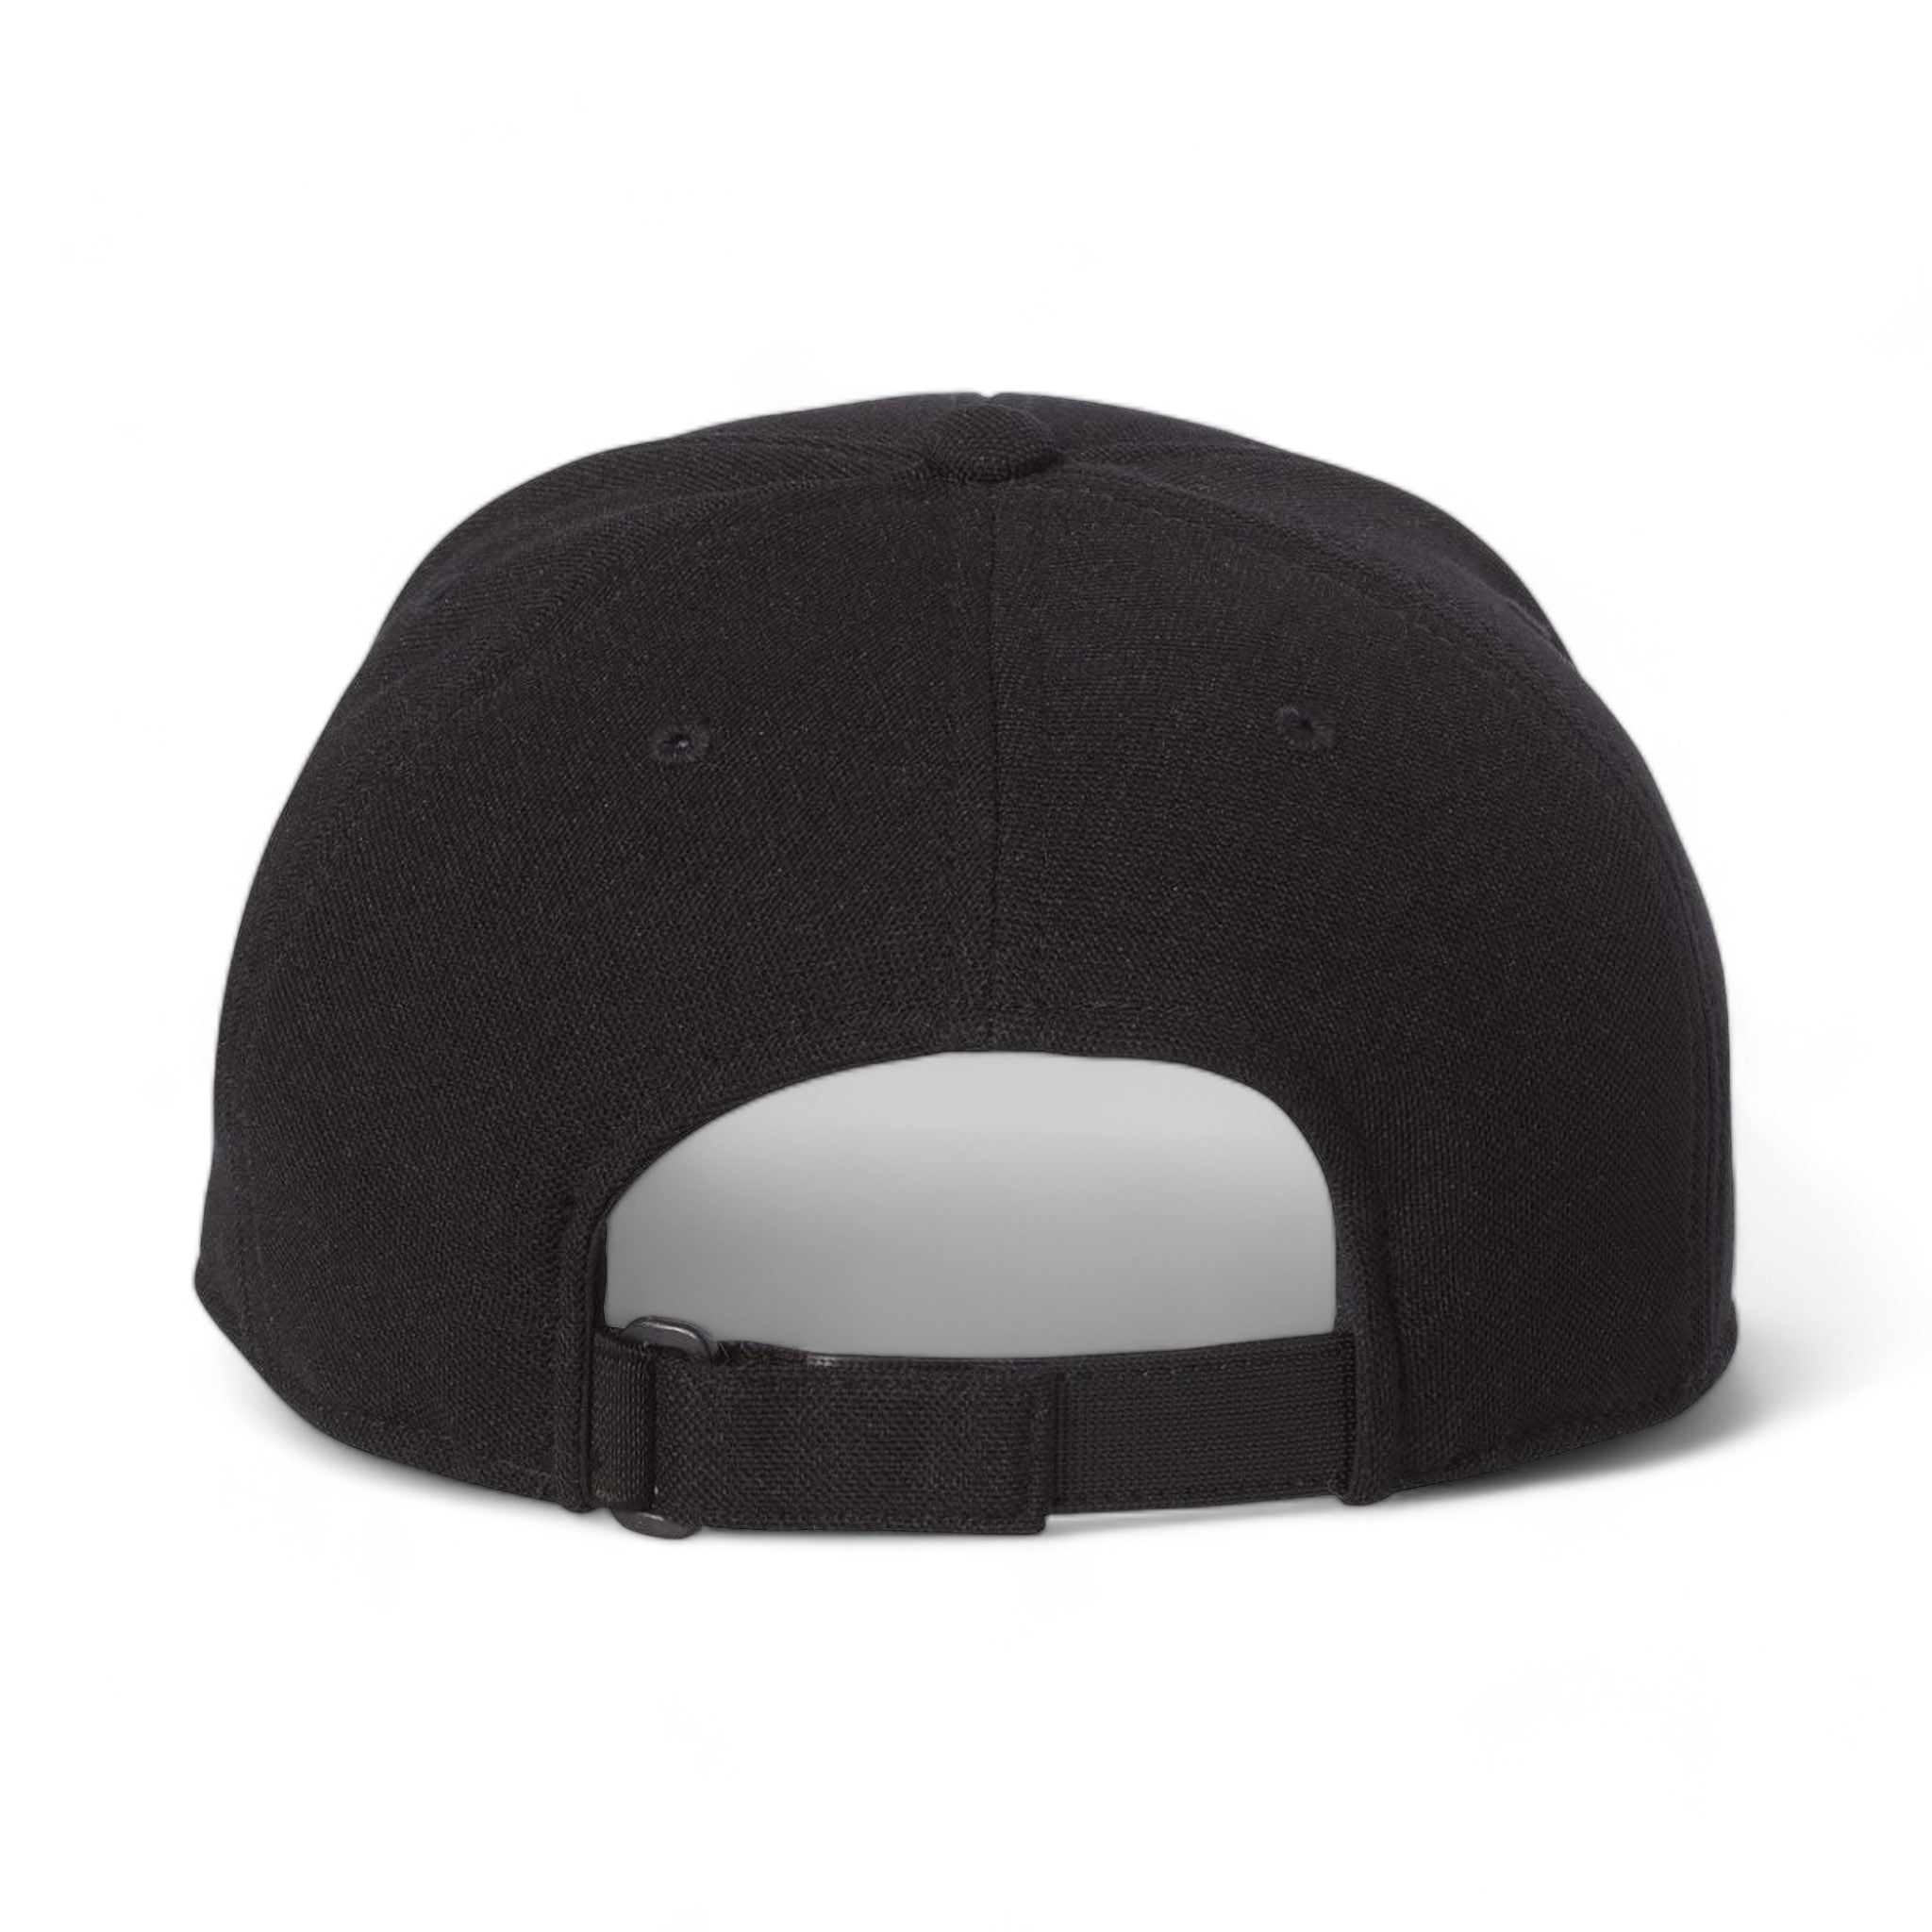 Back view of Flexfit 110P custom hat in black